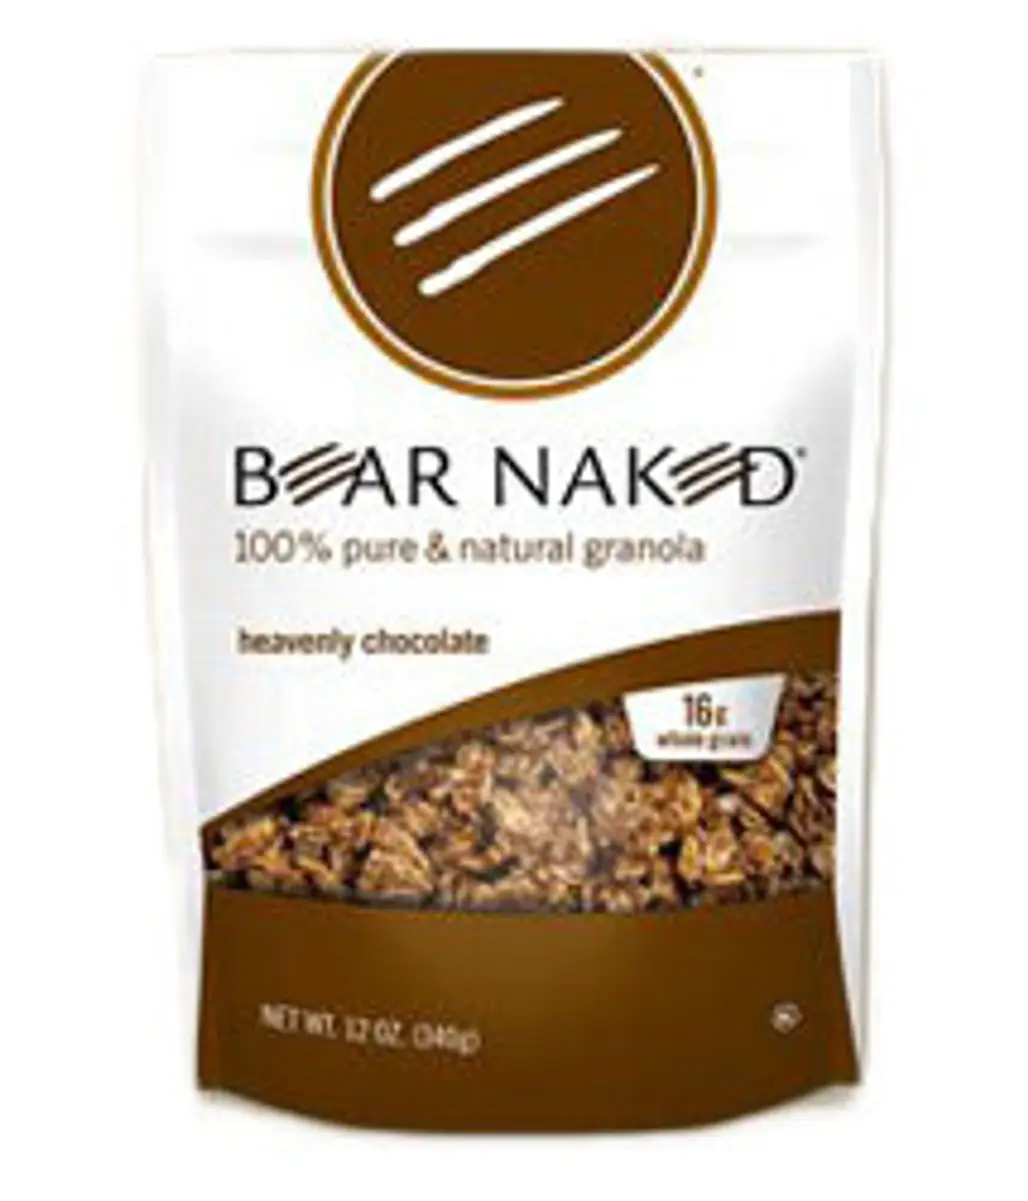 Bear Naked Heavenly Chocolate Granola